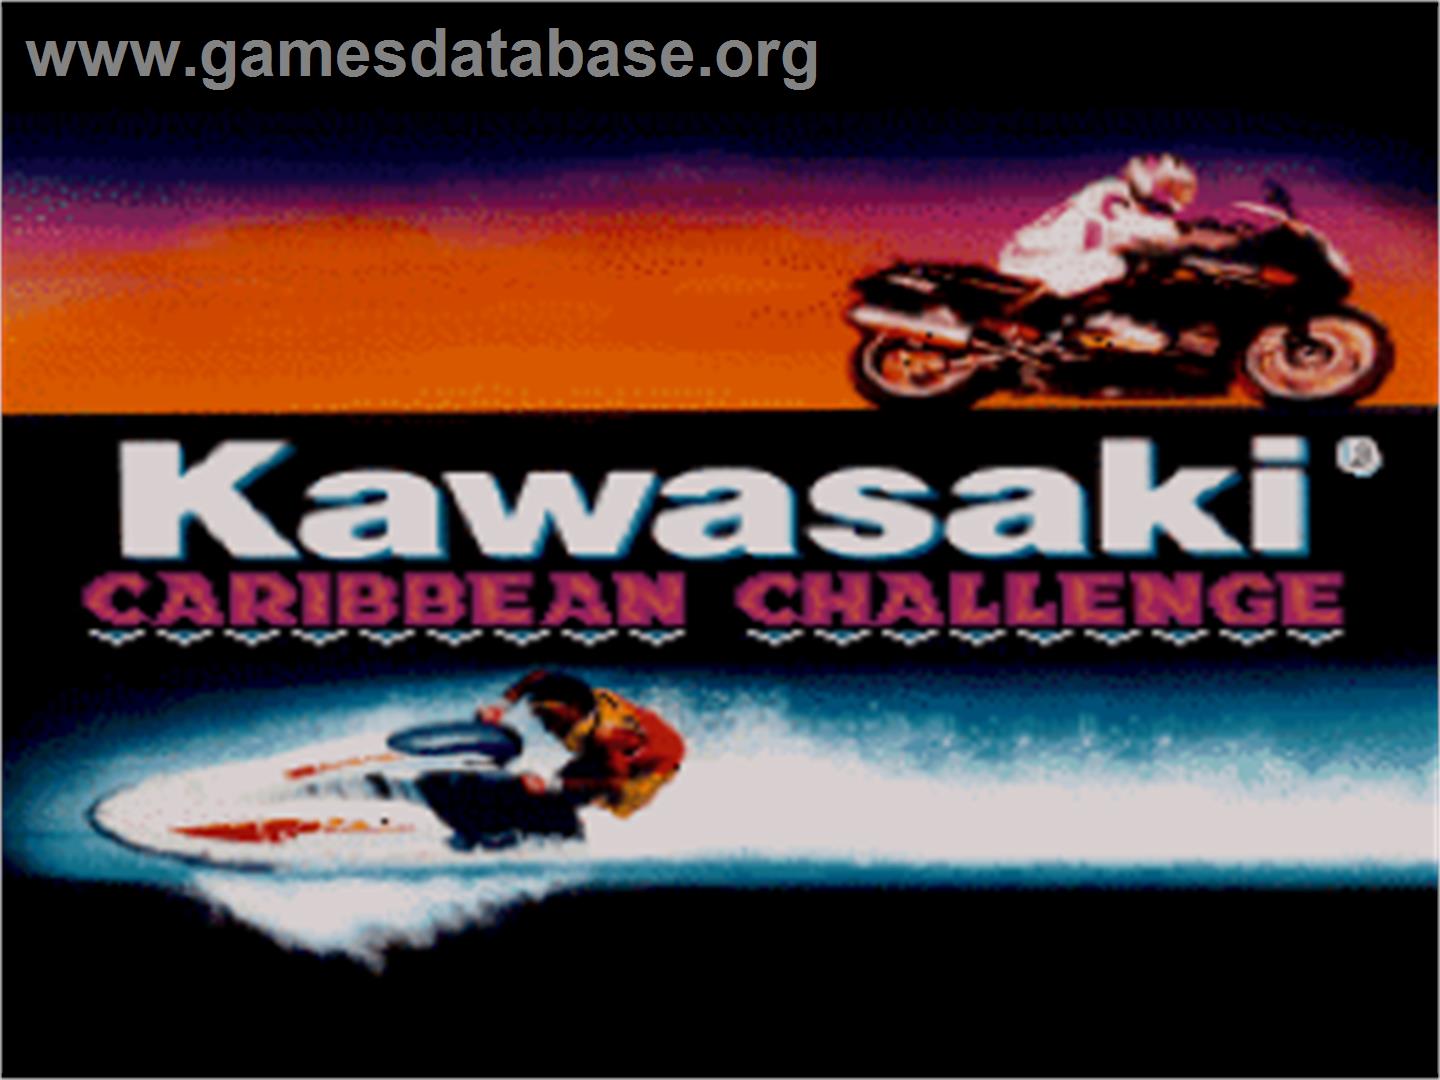 Kawasaki Caribbean Challenge - Nintendo SNES - Artwork - Title Screen